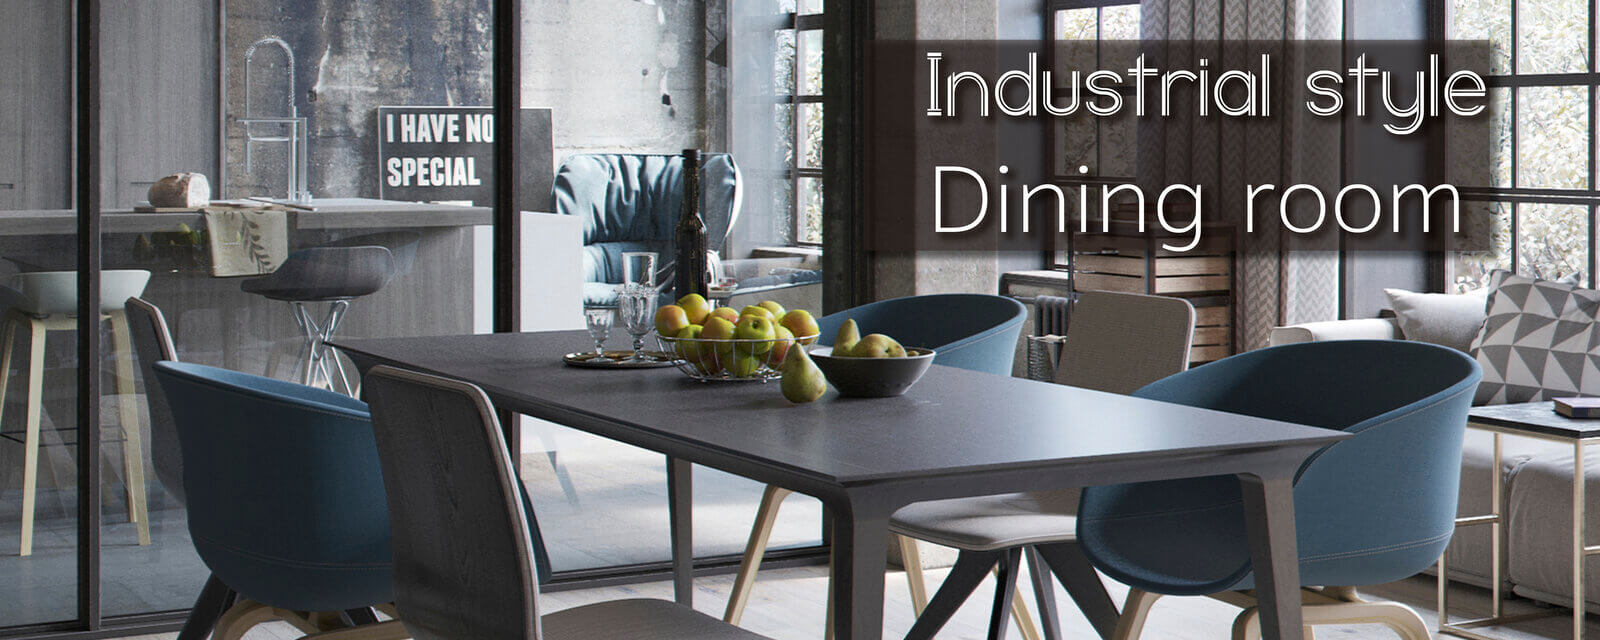 Modern Industrial Dining Room